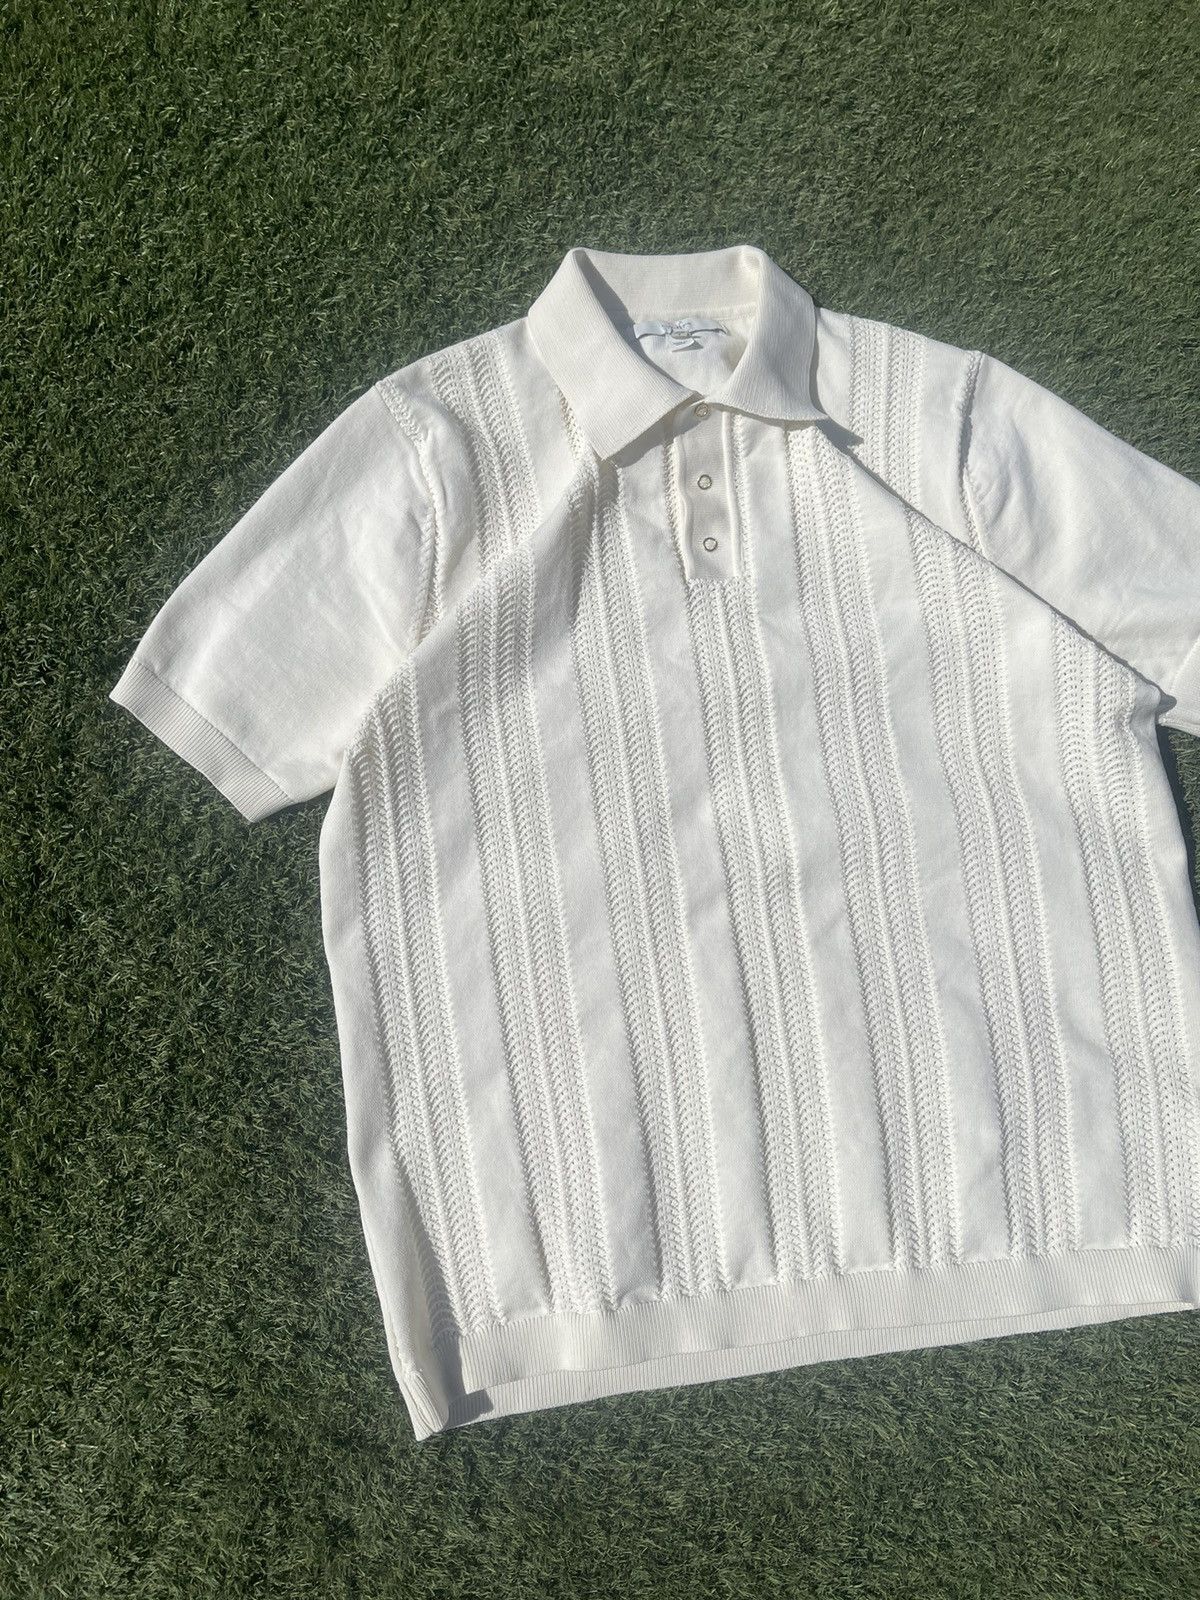 Supreme Supreme Plaid Knit Polo Shirt | Grailed